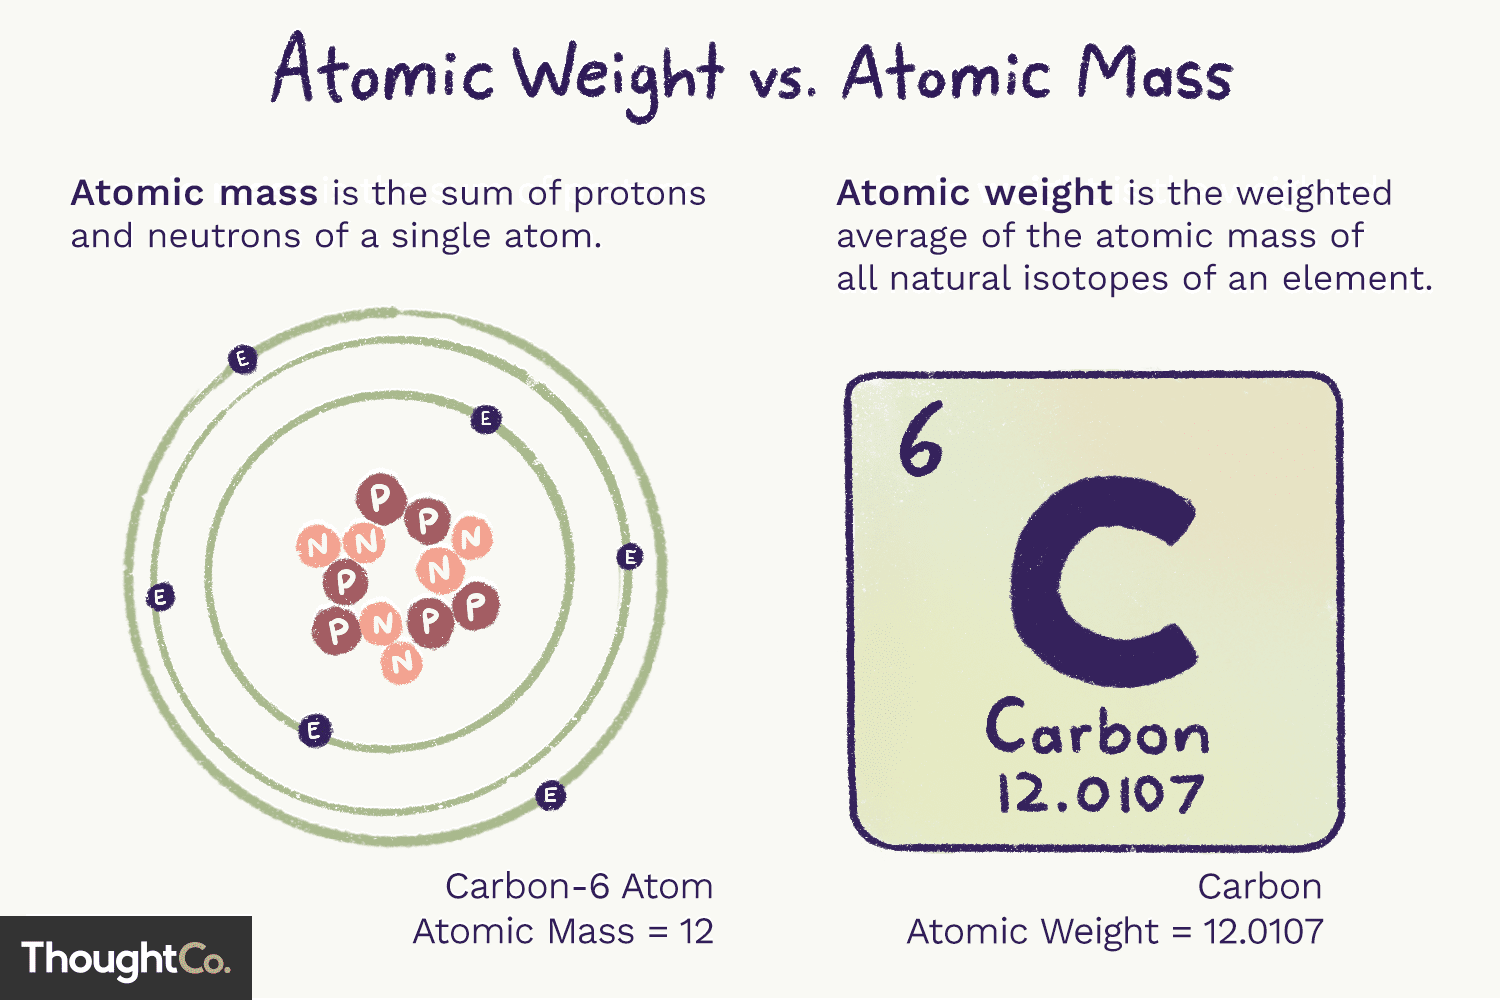 <p>(Atomic weight is the same thing as atomic #).</p>